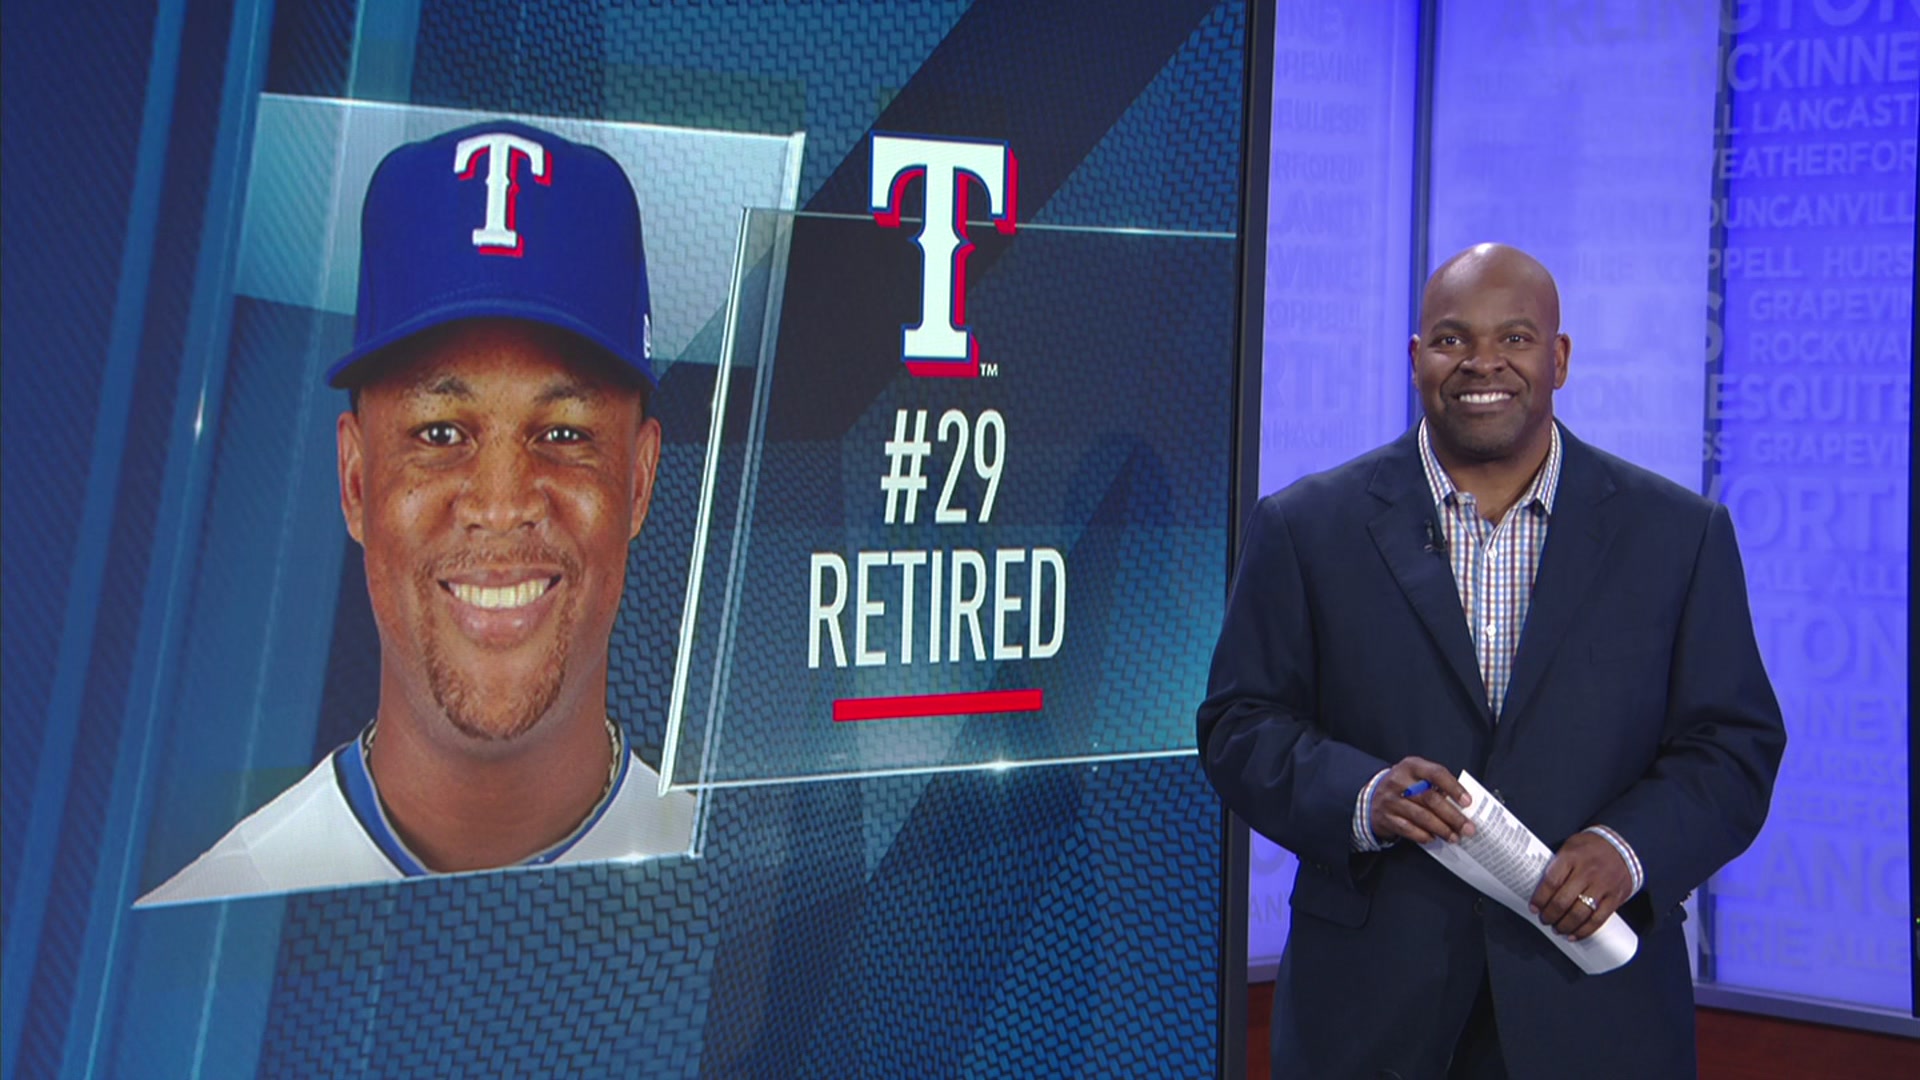 Texas Rangers Set Date For Adrian Beltre's Jersey Retirement